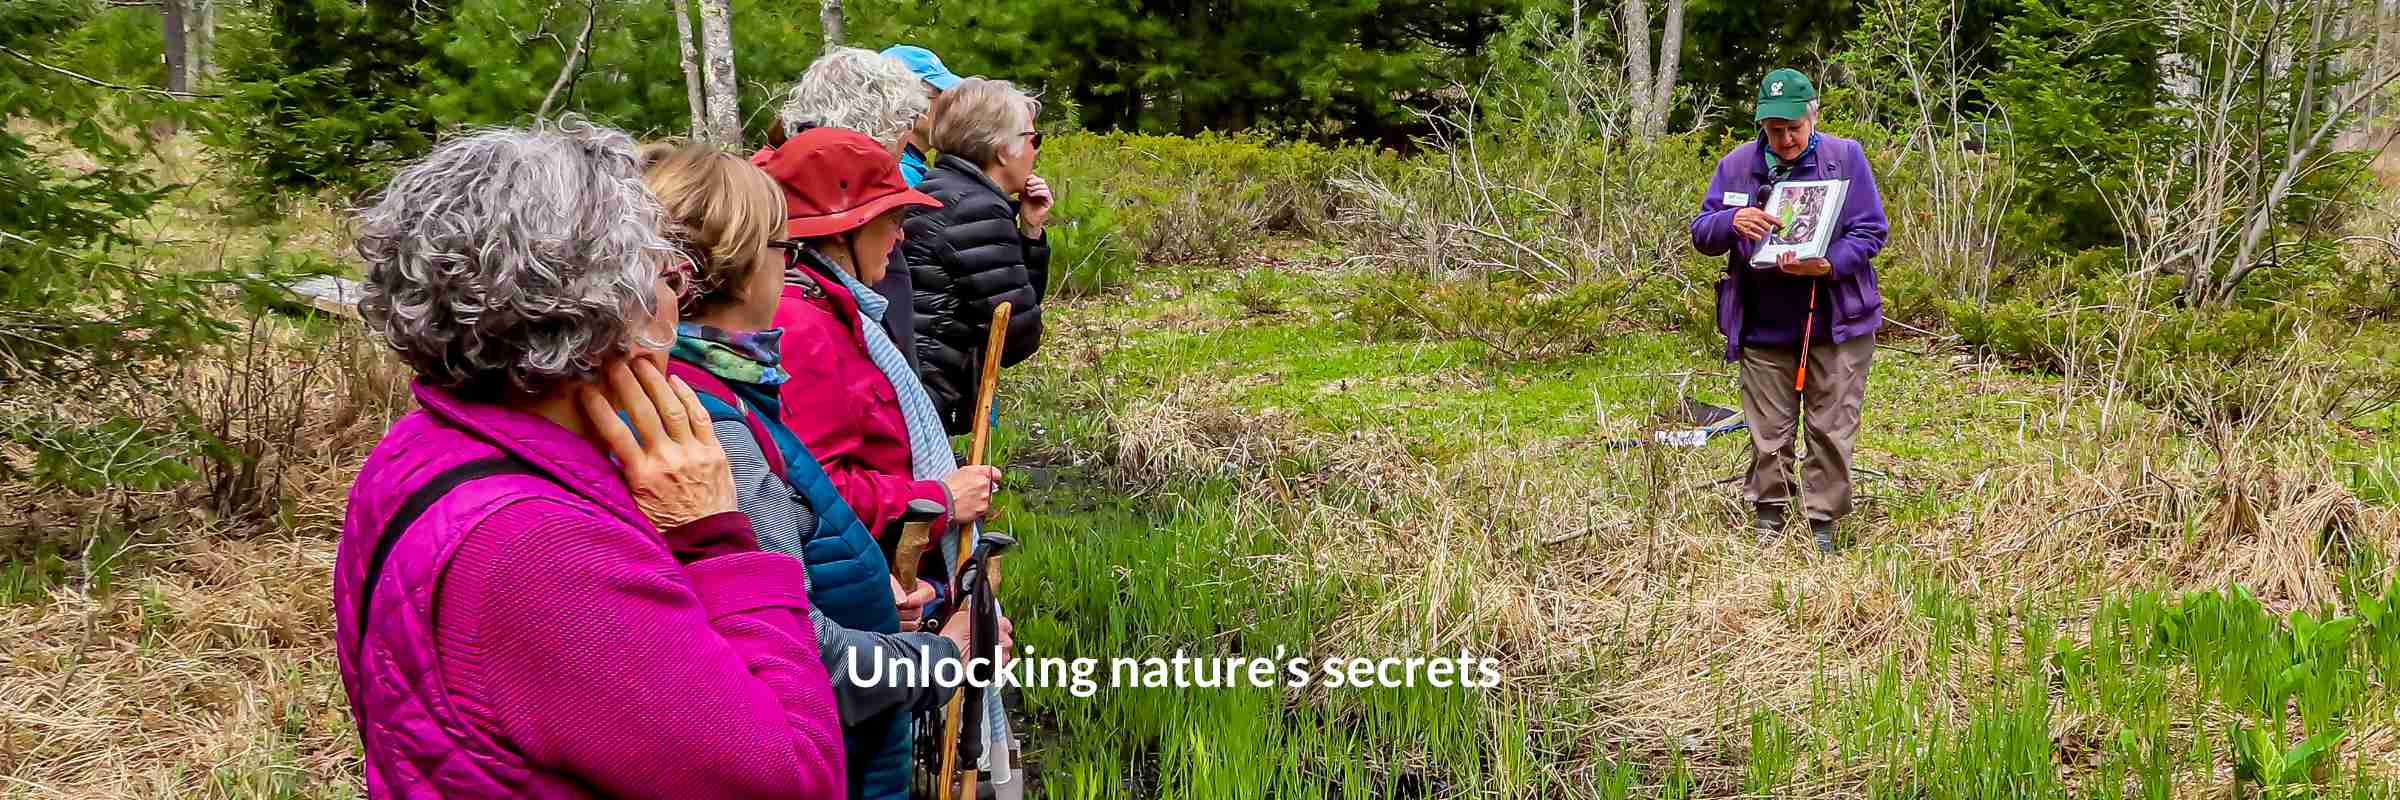 6 Unlocking nature’s secrets